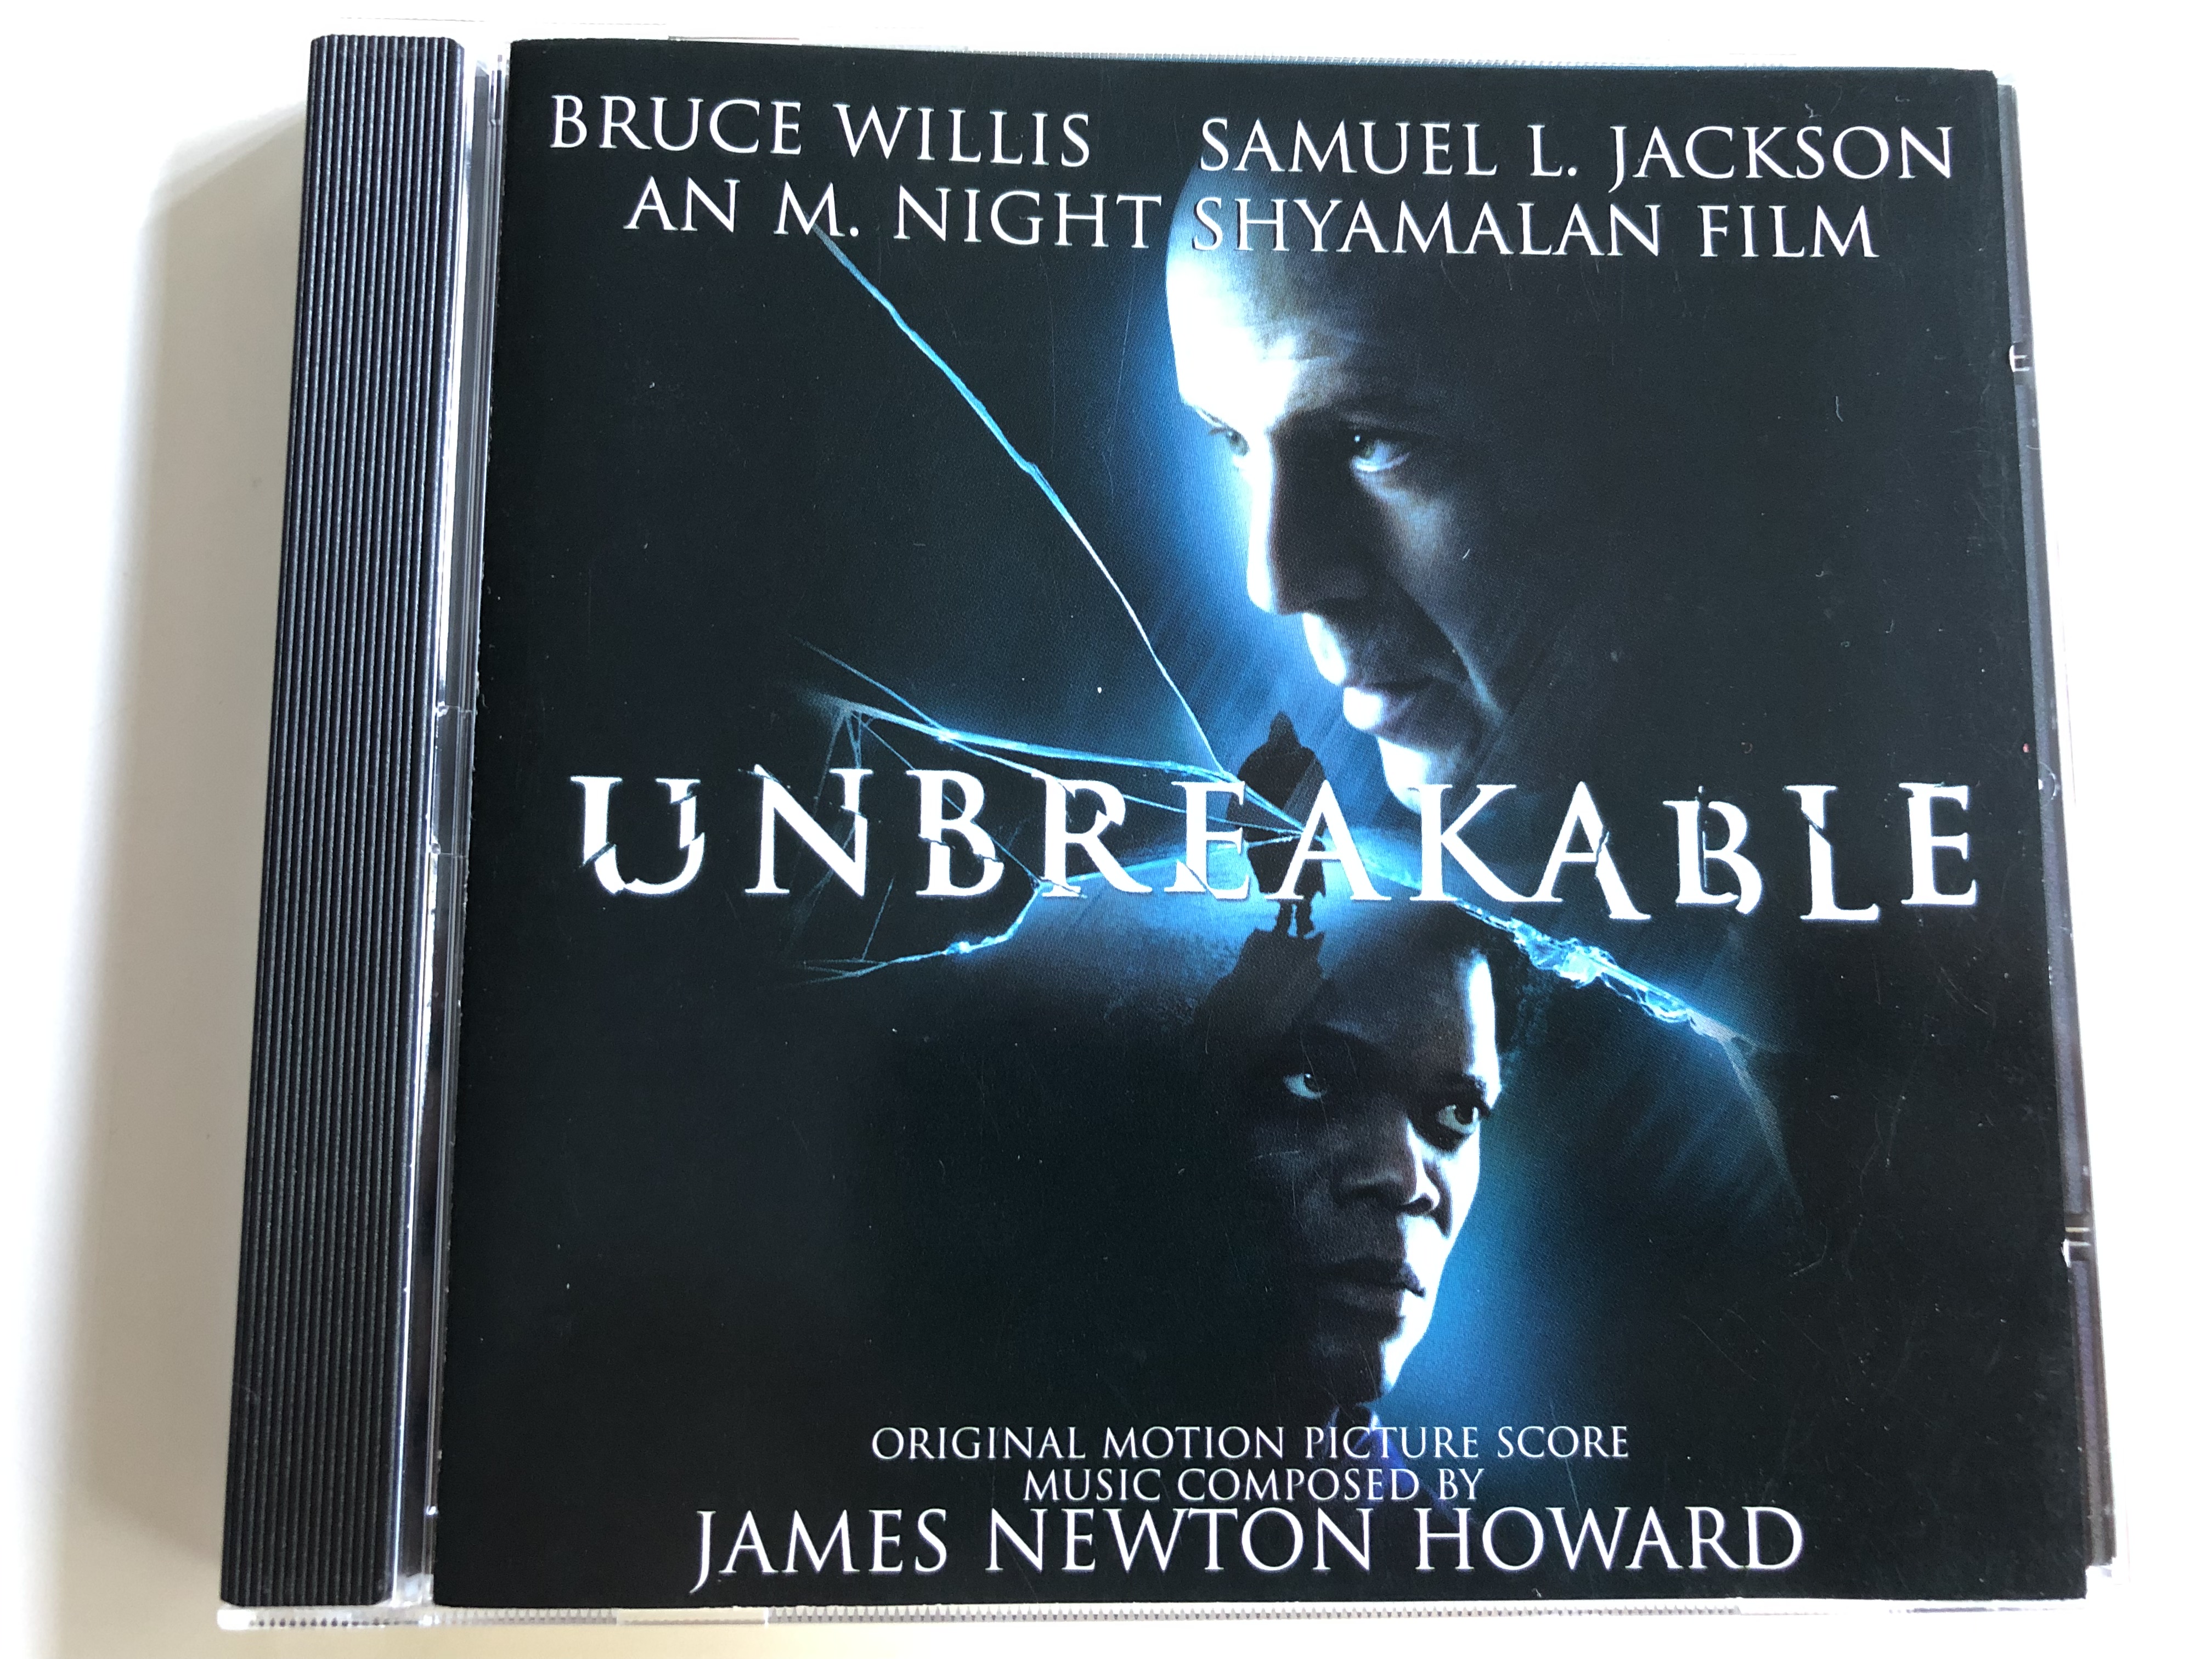 unbreakable-original-motion-picture-score-music-composed-by-james-newton-howard-bruce-willis-samuel-l.-jackson-an-m.-night-shyamalan-film-audio-cd-2000-1-.jpg